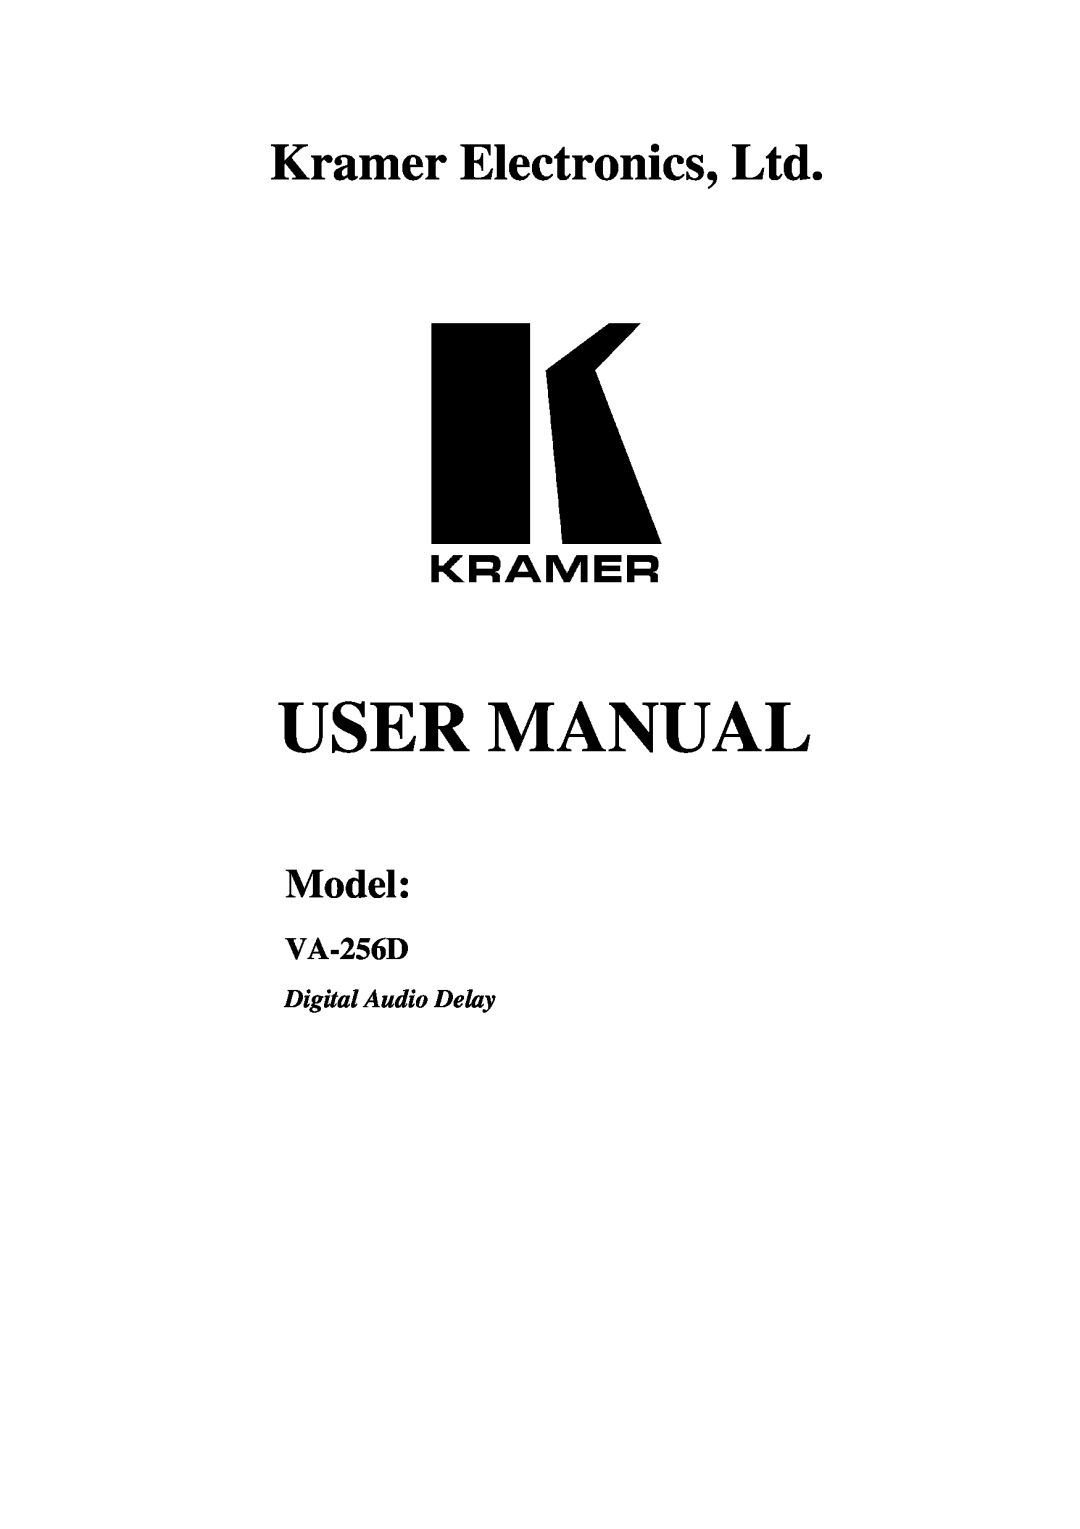 Kramer Electronics VA-256D user manual Model, Digital Audio Delay 